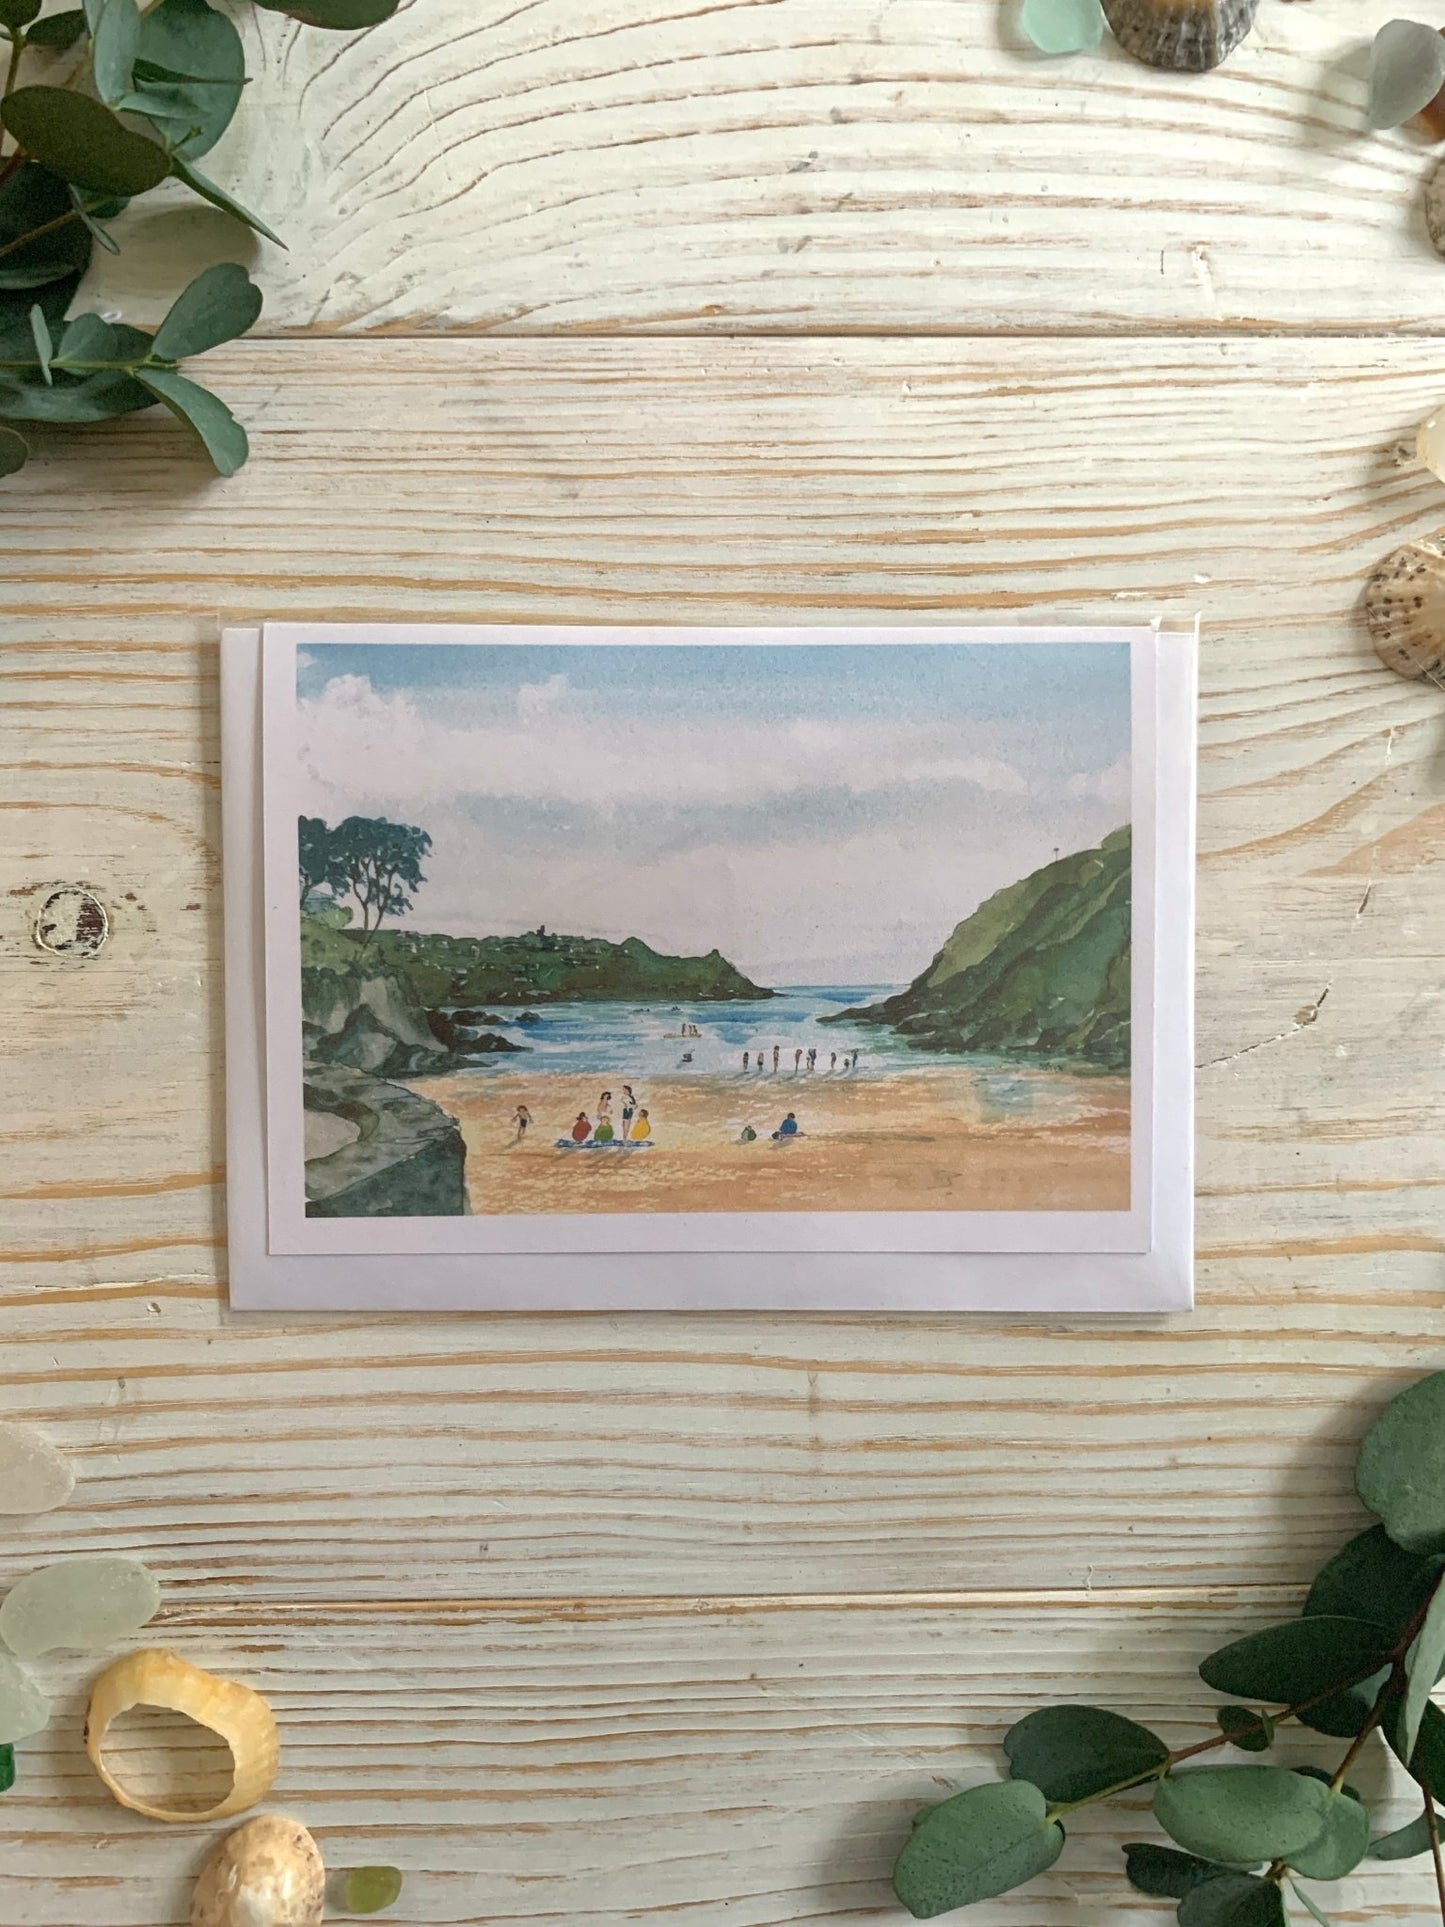 Readymoney in Watercolour Card - Readymoney Beach Shop